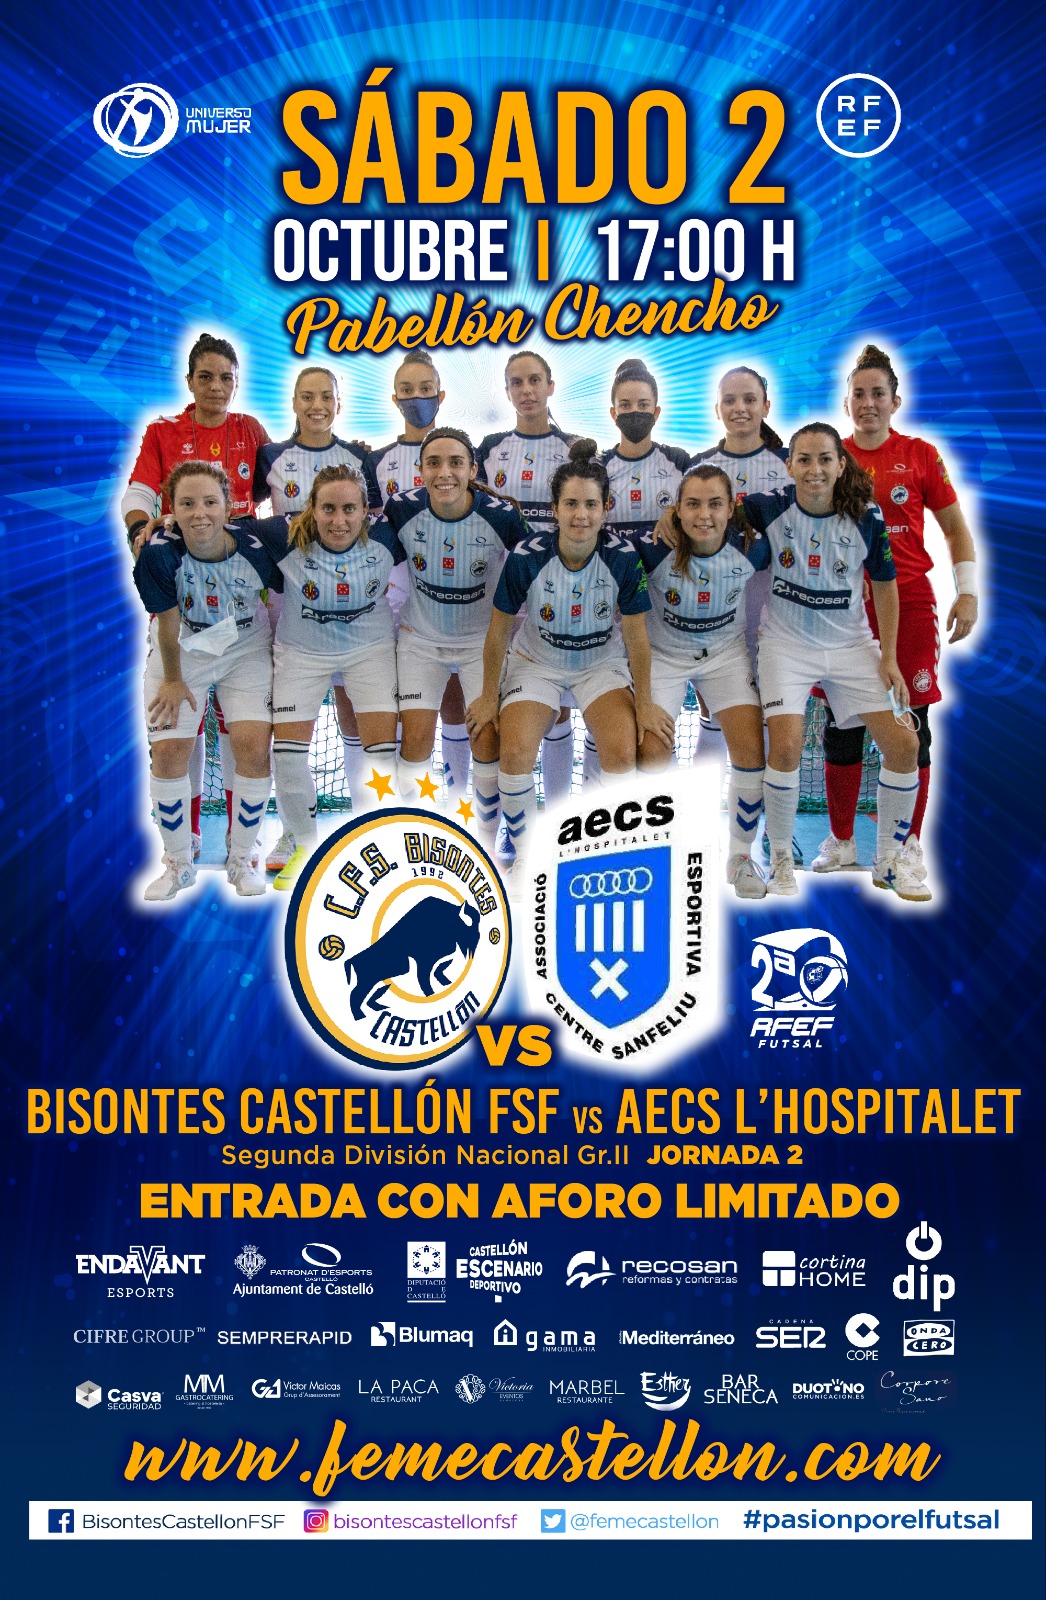 Previa del Partido de Liga de 2ª División: Bisontes Castellón FSF - AECS L'Hospitalet FS. 2ª Jornada. Grupo 2º